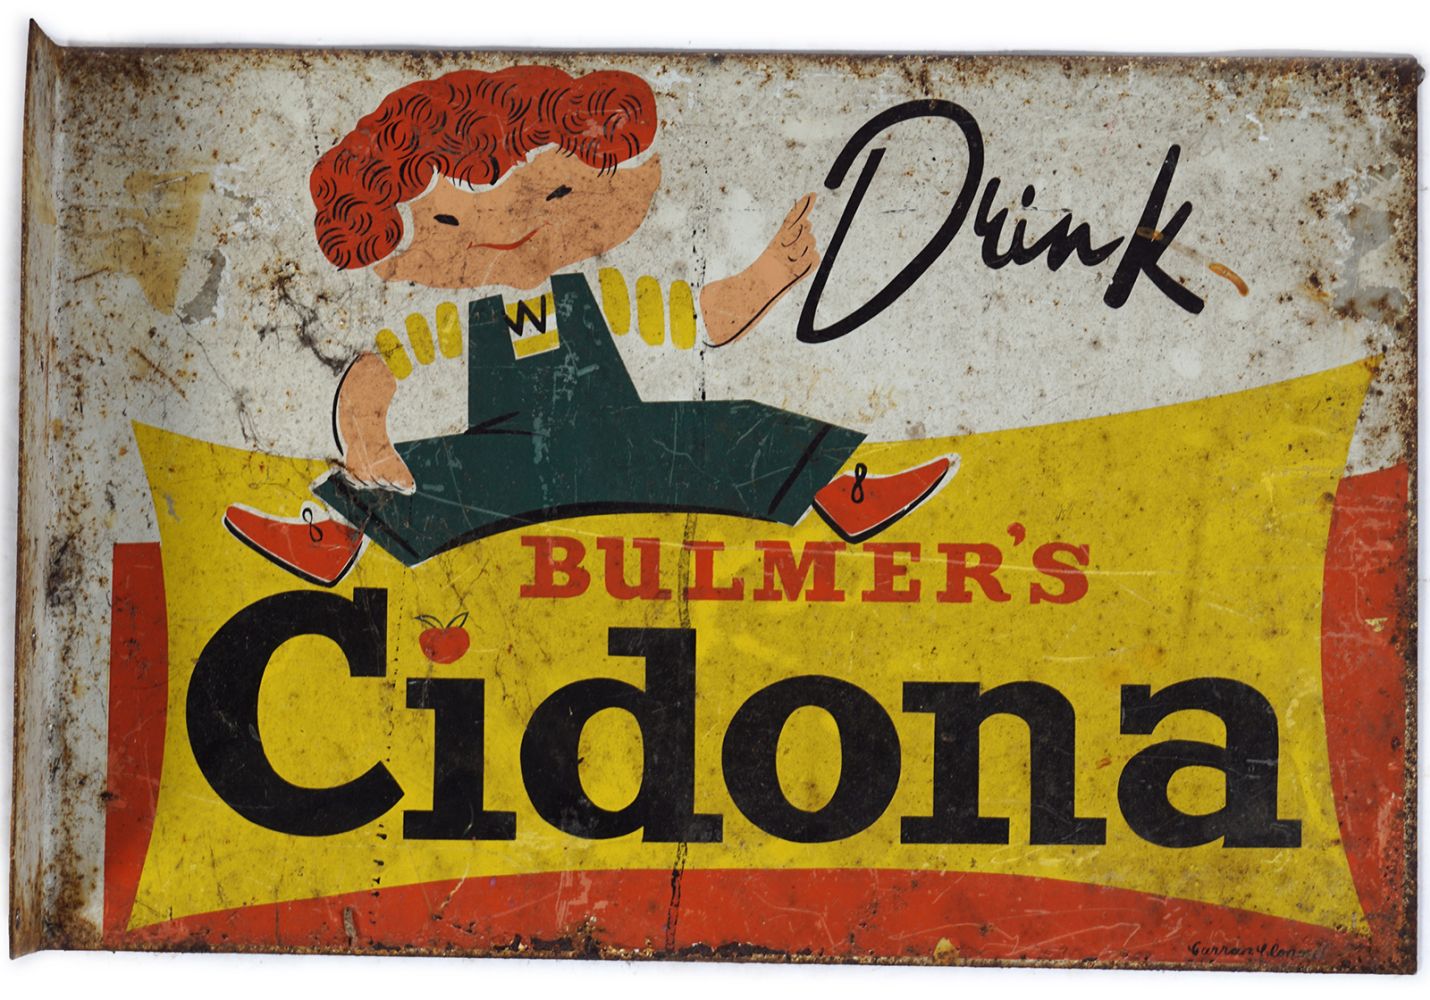 DRINK BULMER'S CIDONA ORIGINAL SIGN